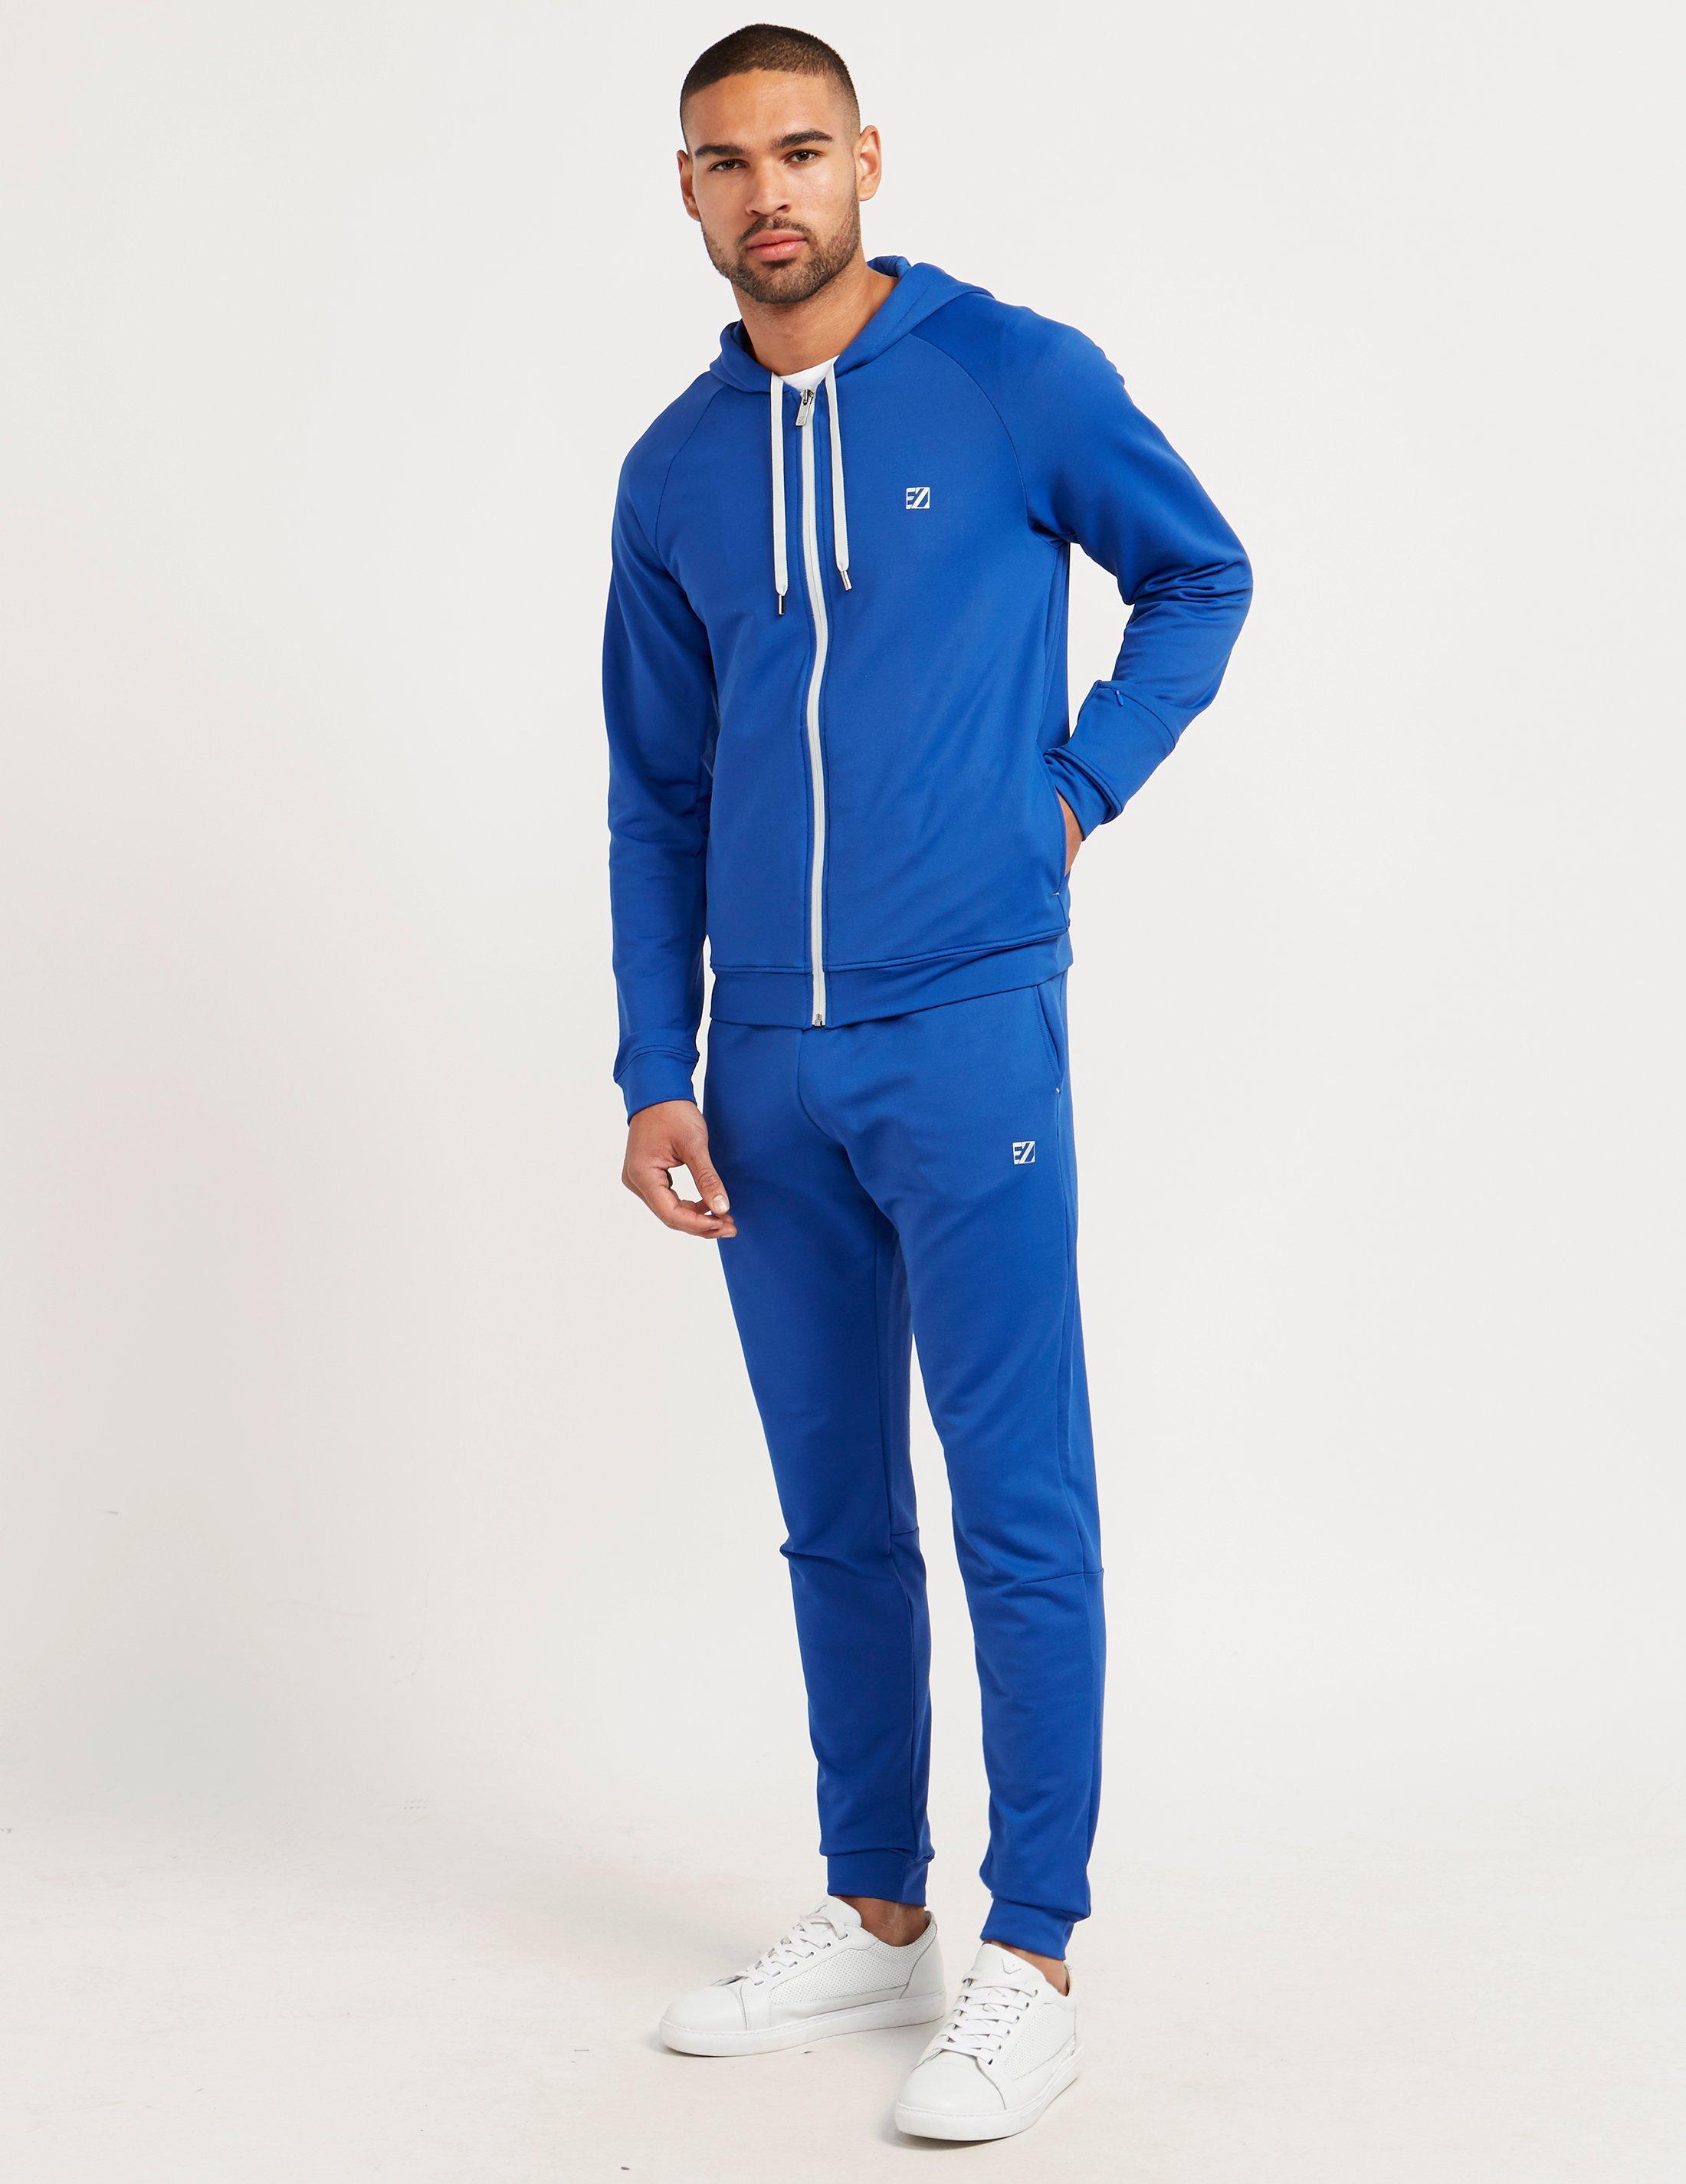 Z Zegna Track Suit in Blue for Men - Lyst